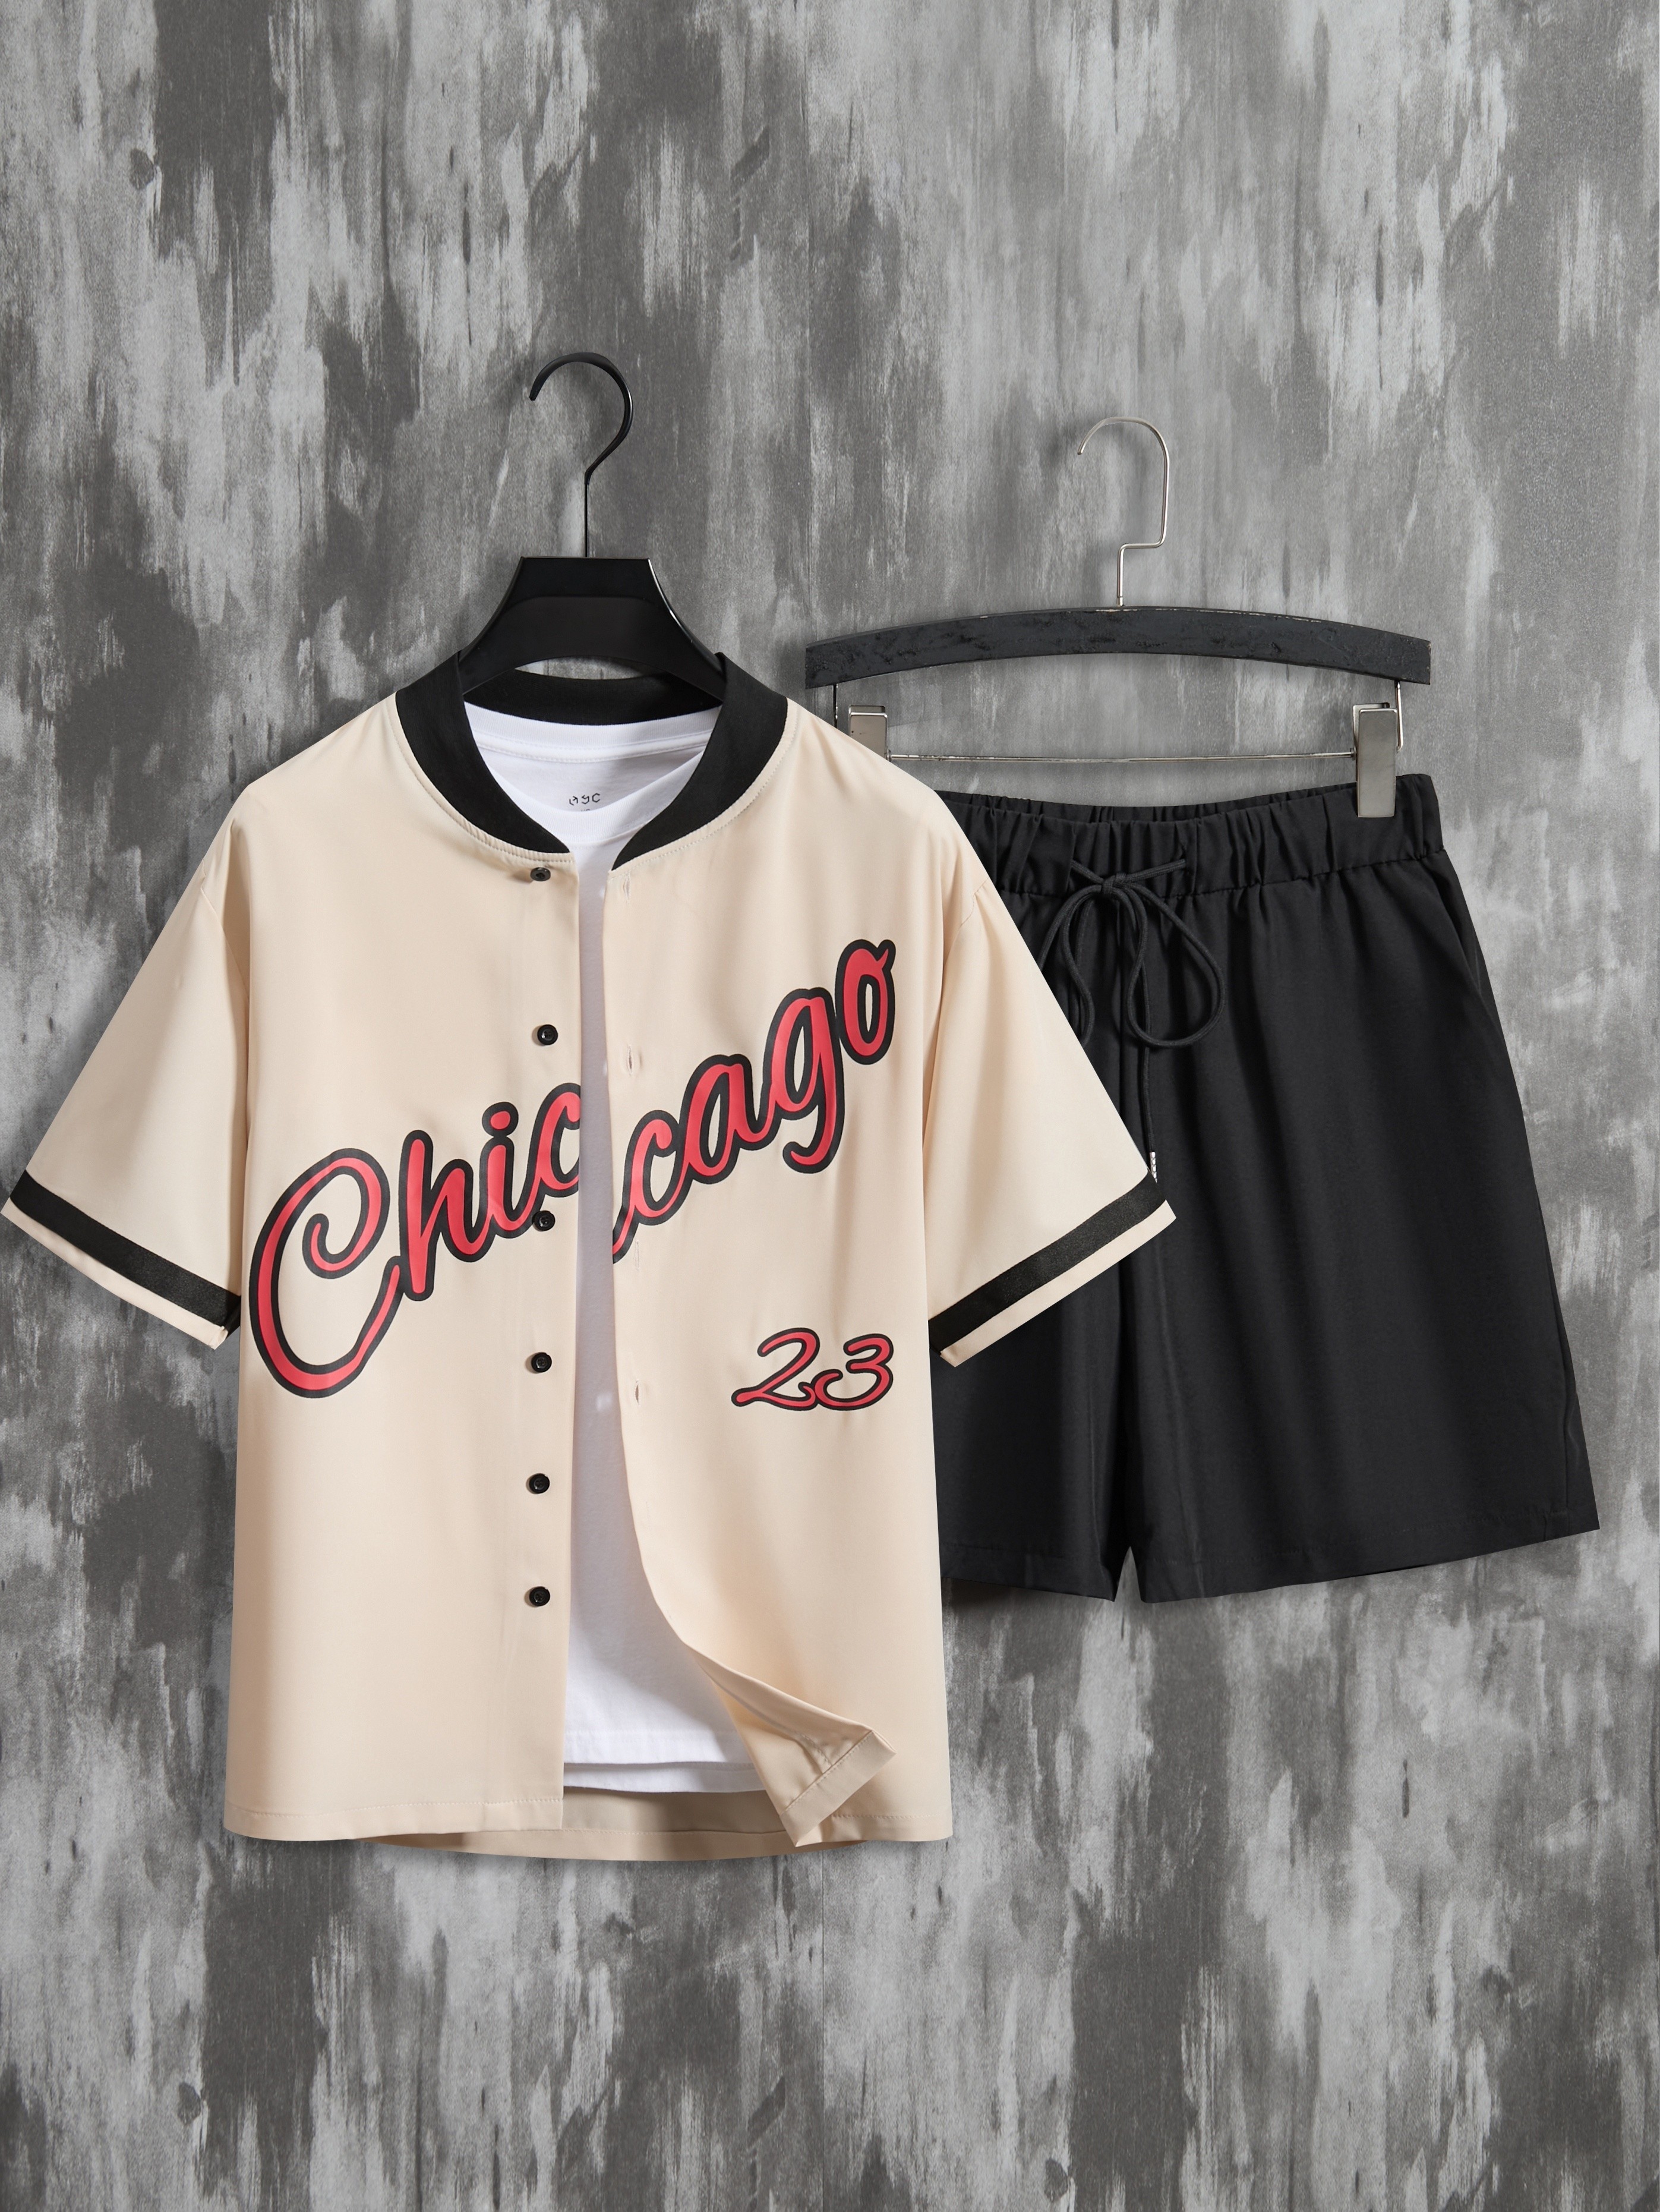 chicago'' Print,, Men's Short Sleeve Baseball Jersey Shirt And